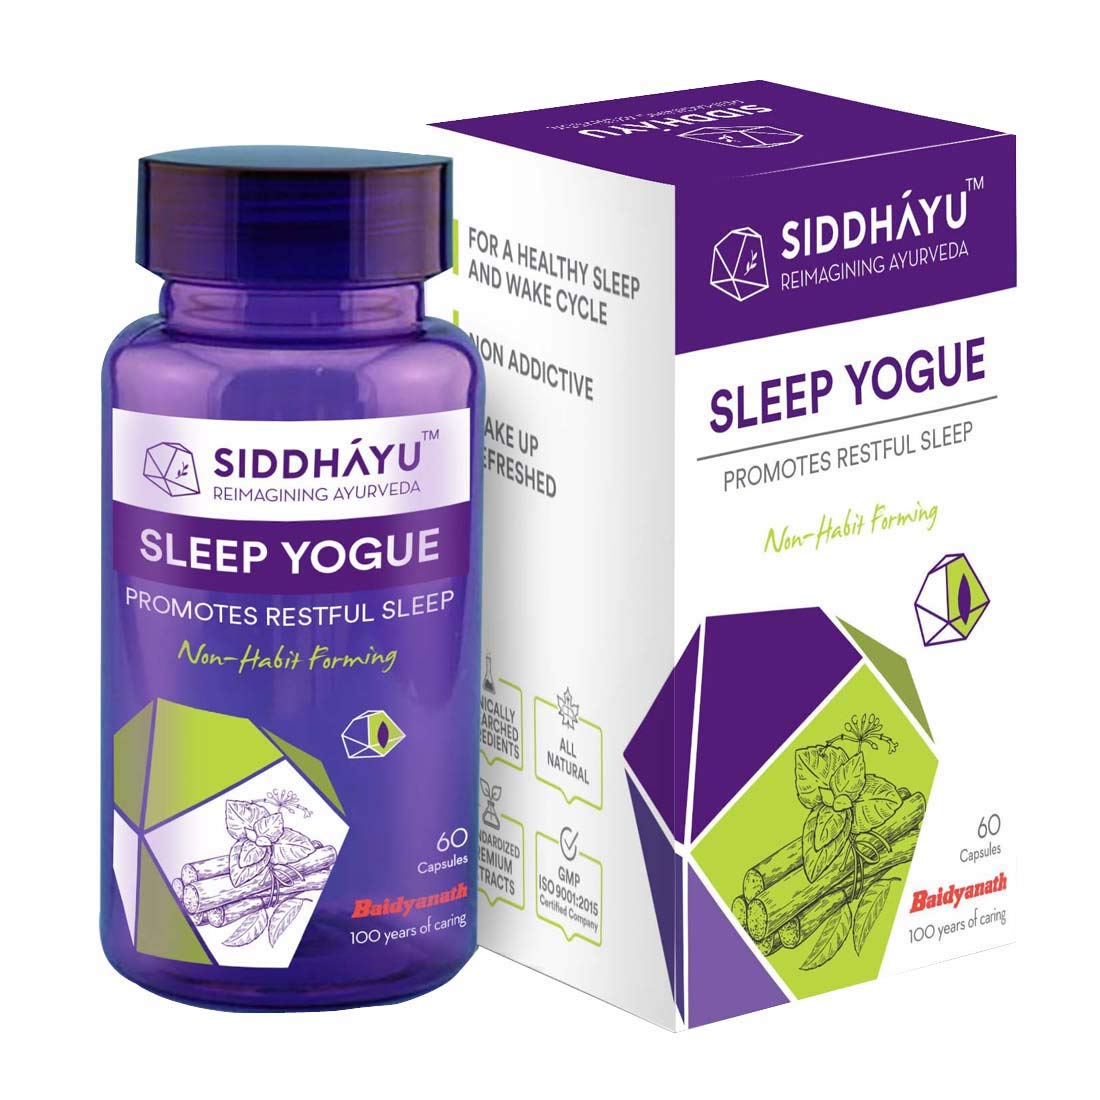 Siddhayu Sleep Yogue for Restful Sleep, 60 Capsules, Pack of 1 